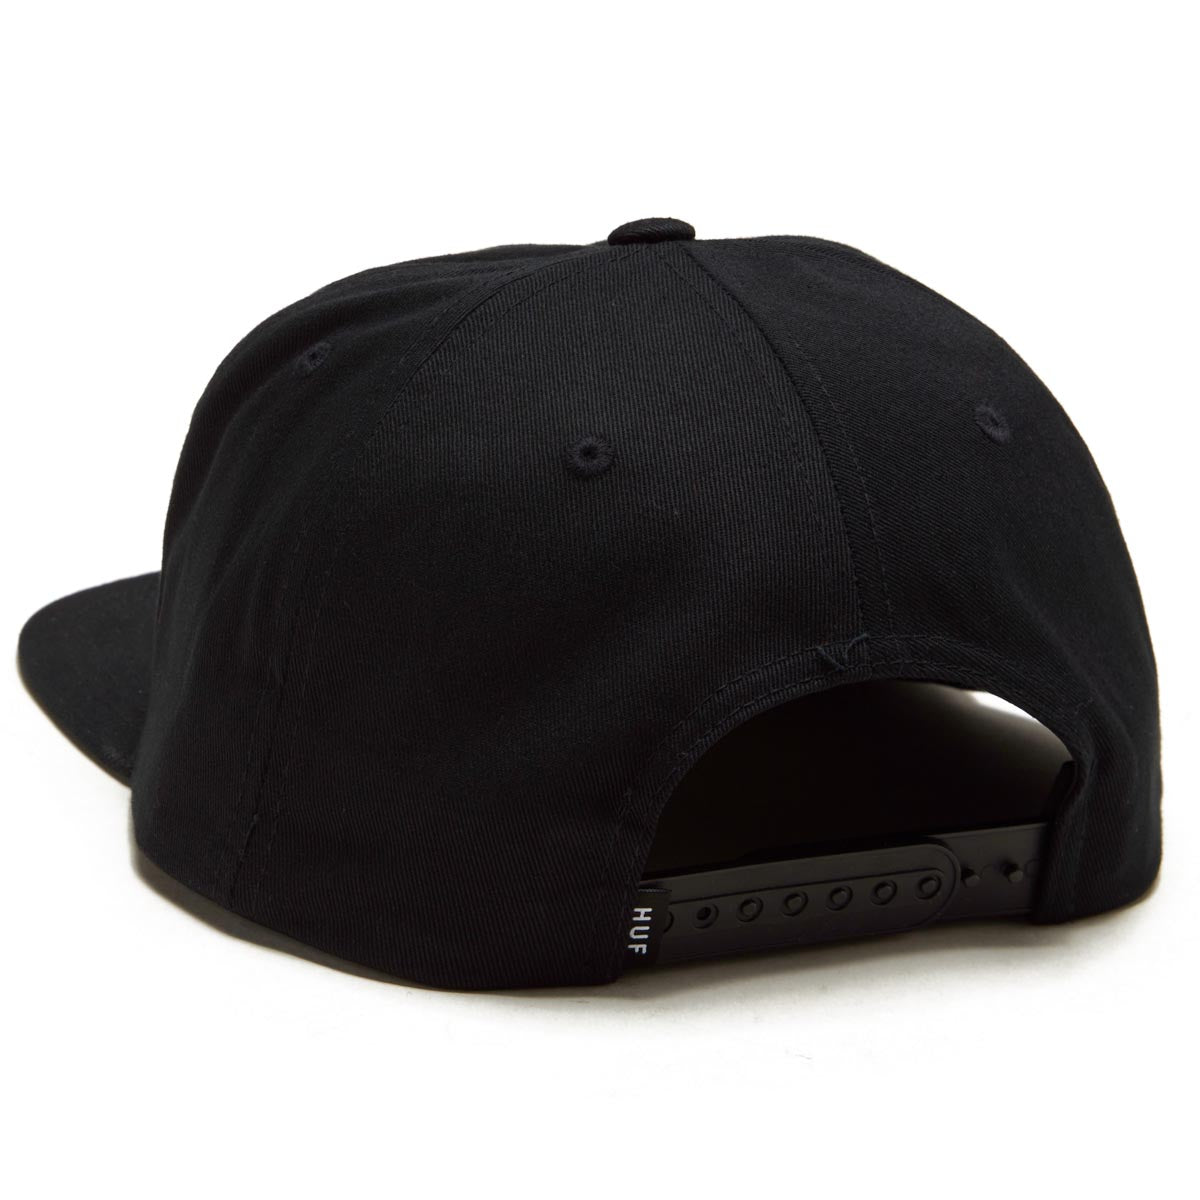 HUF Set Box Snapback Hat - Black image 2